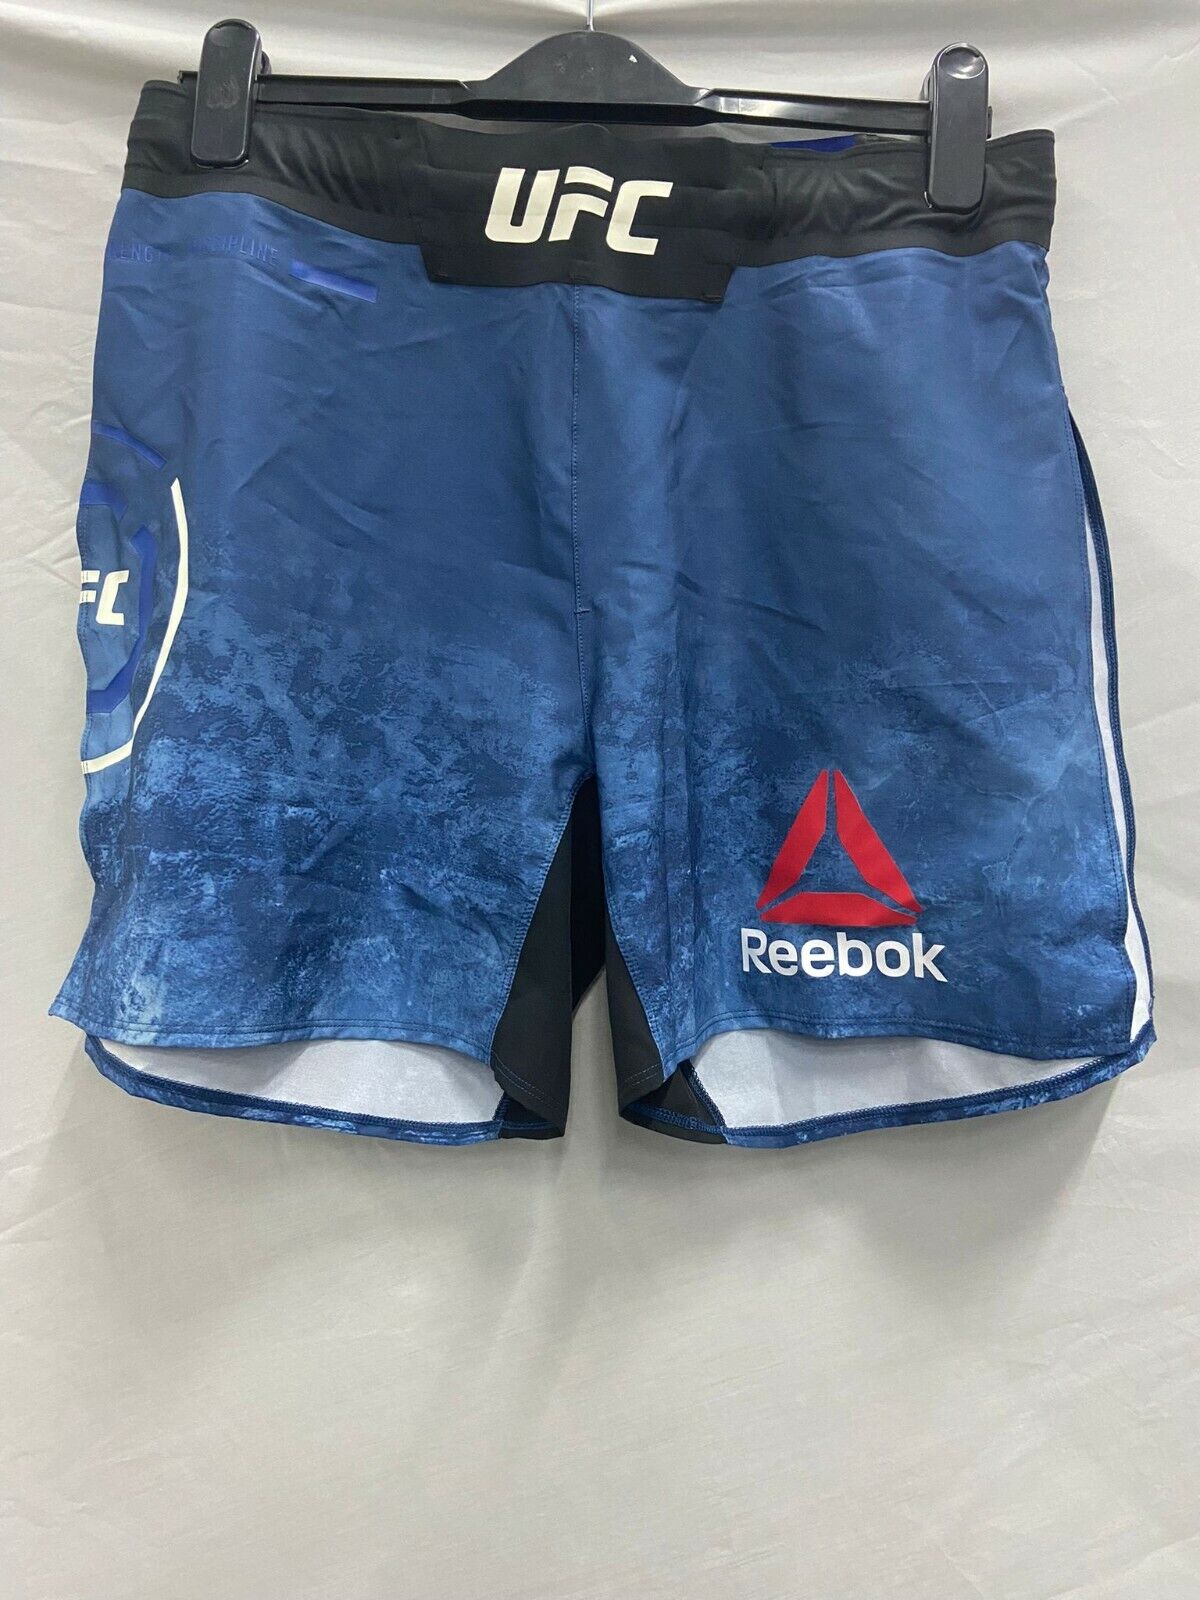 UFC Reebok Gladiator Shorts | MMA Gladiator Shorts Retailer – FNRetailer